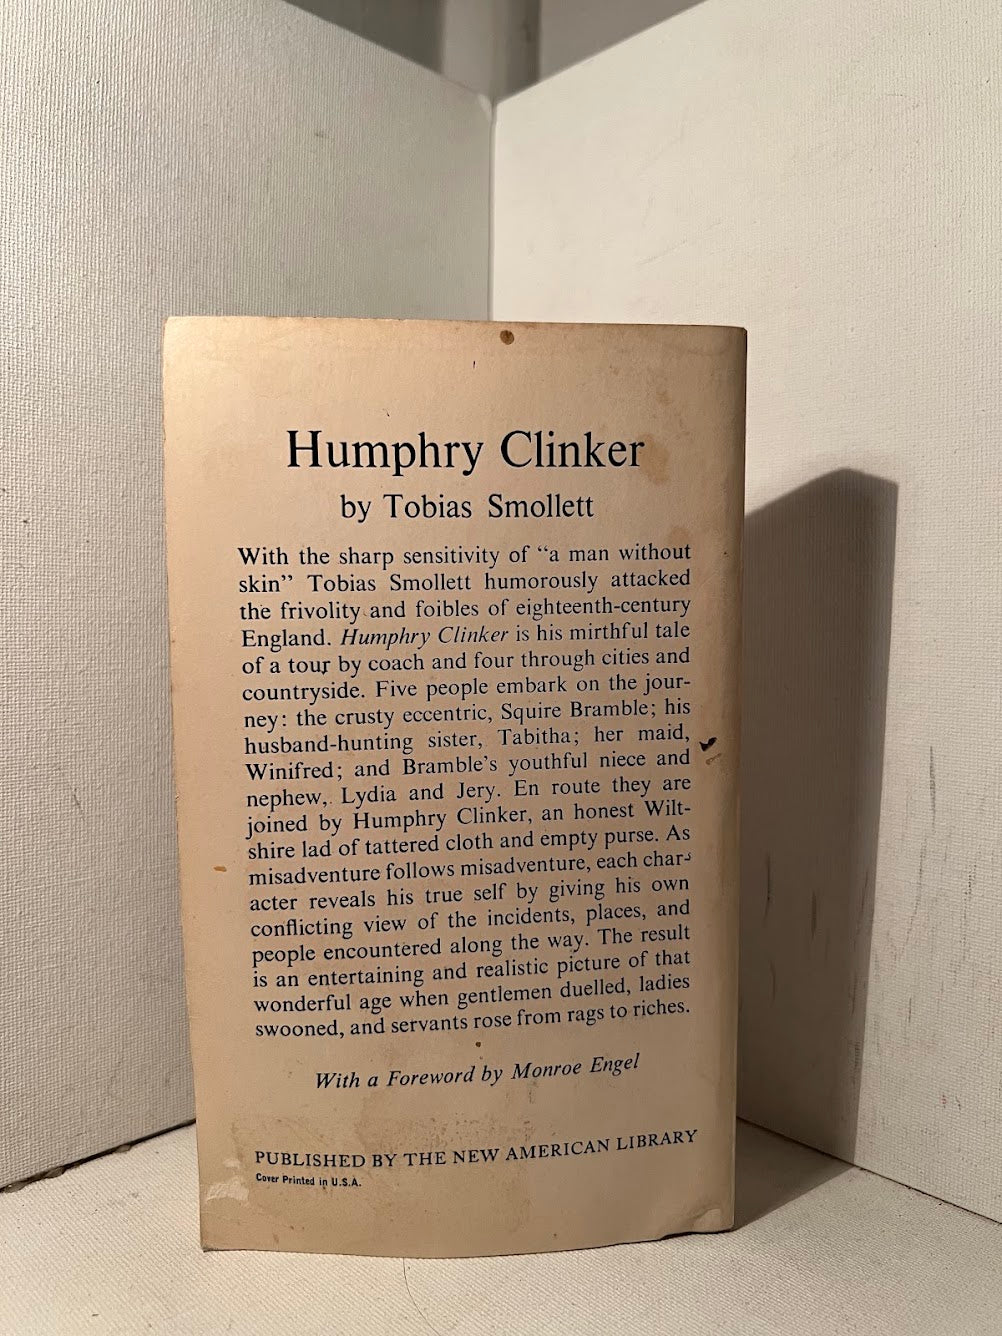 Humphry Clinker by Tobias Smollett